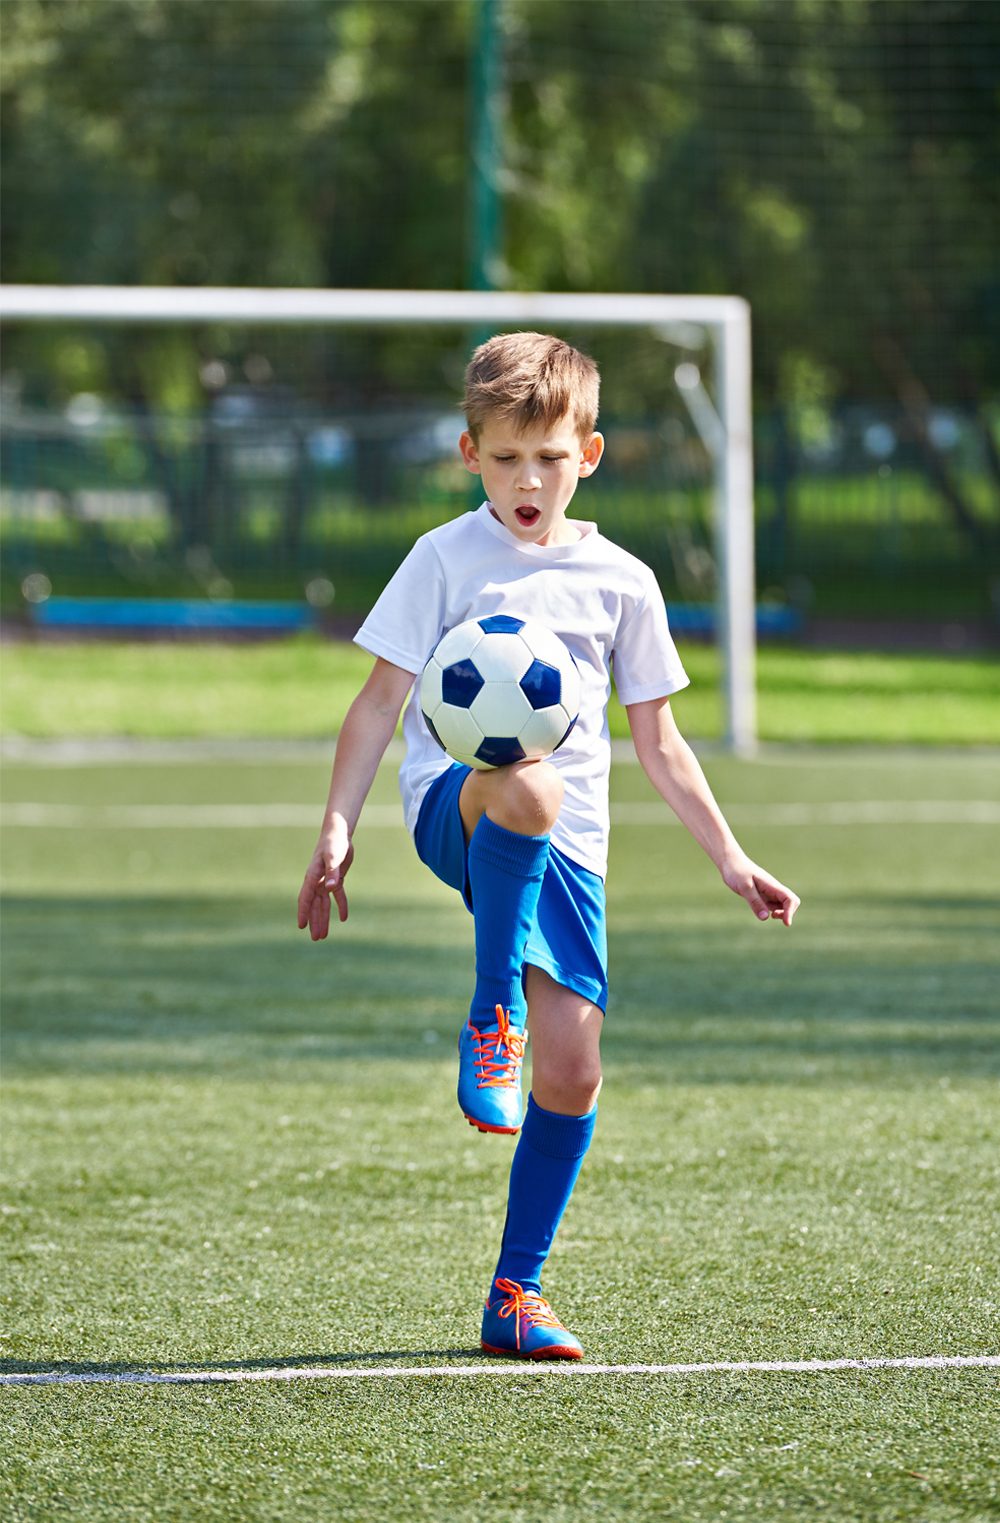 Boy on a football pitch kicking a ball